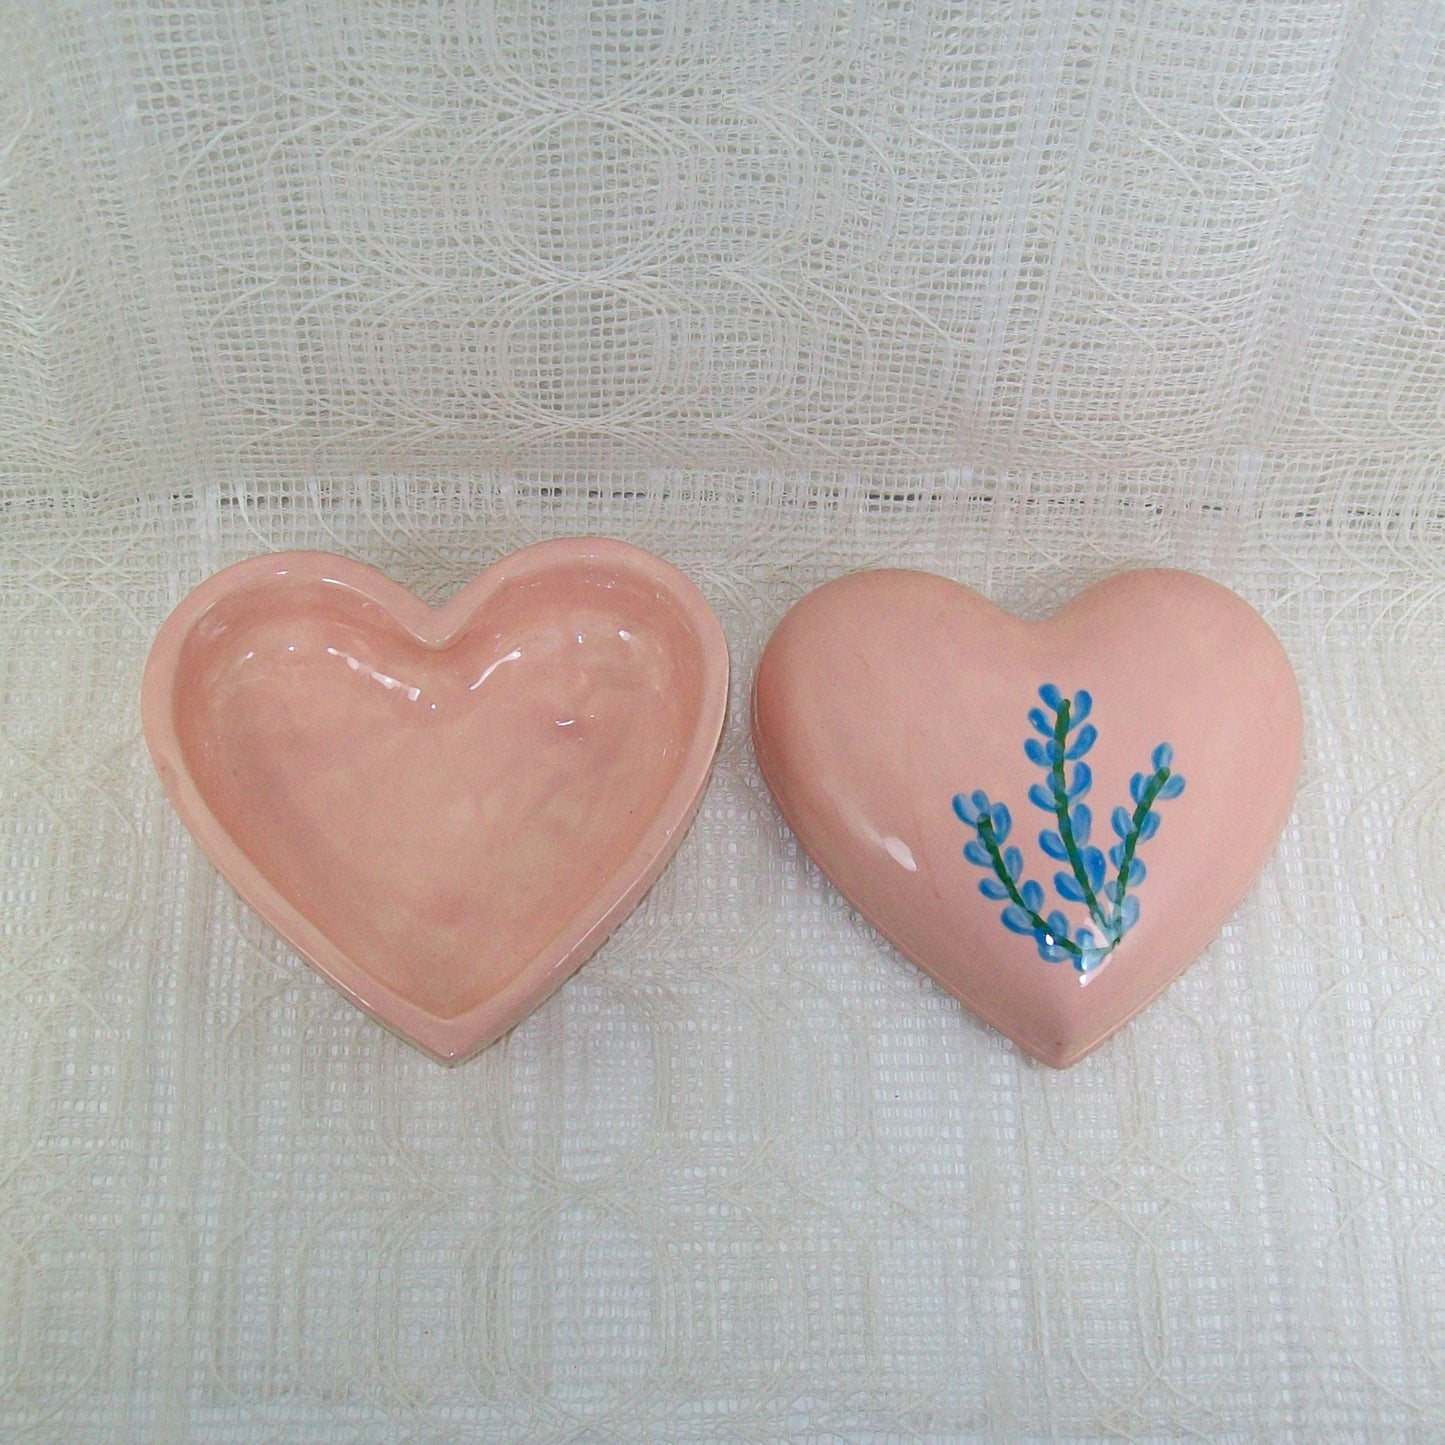 Ceramic Trinket Box / Ceramic Heart Shaped Box / Treasure Box with Floral Decor / Candy Dish / Treasure Box / Prayer Box / Paper Clip Holder